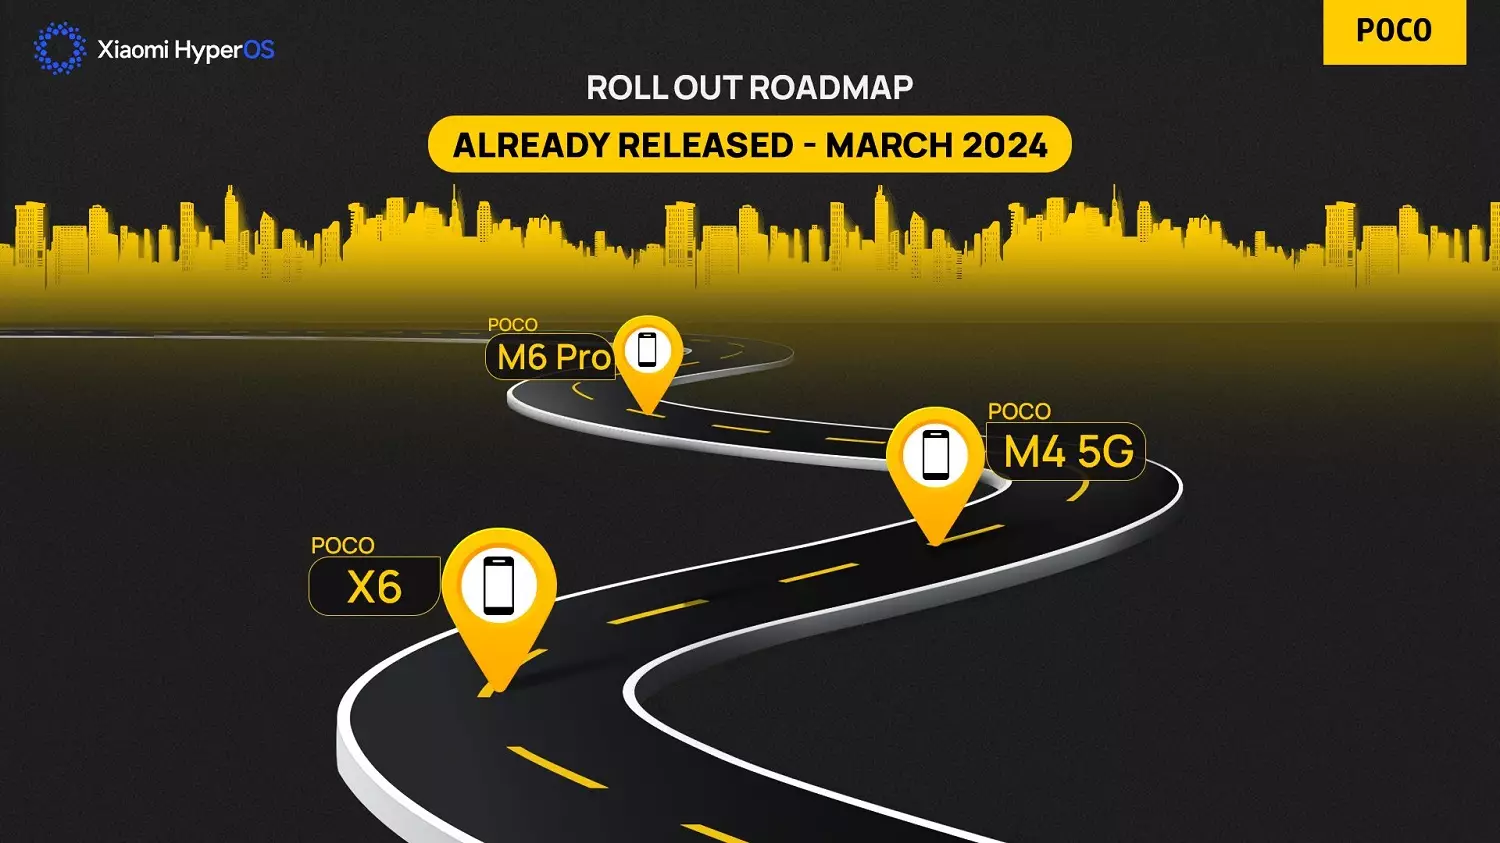 POCO HyperOS March 2024 Update roadmap.